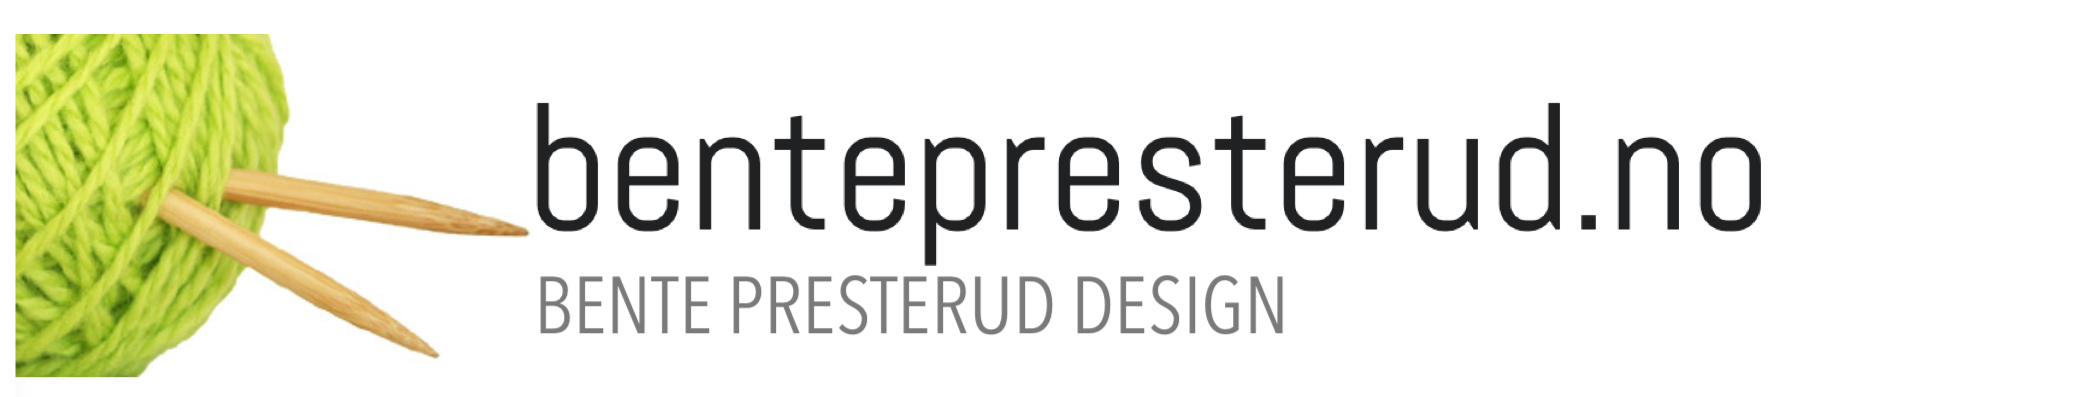 Bente Presterud Design